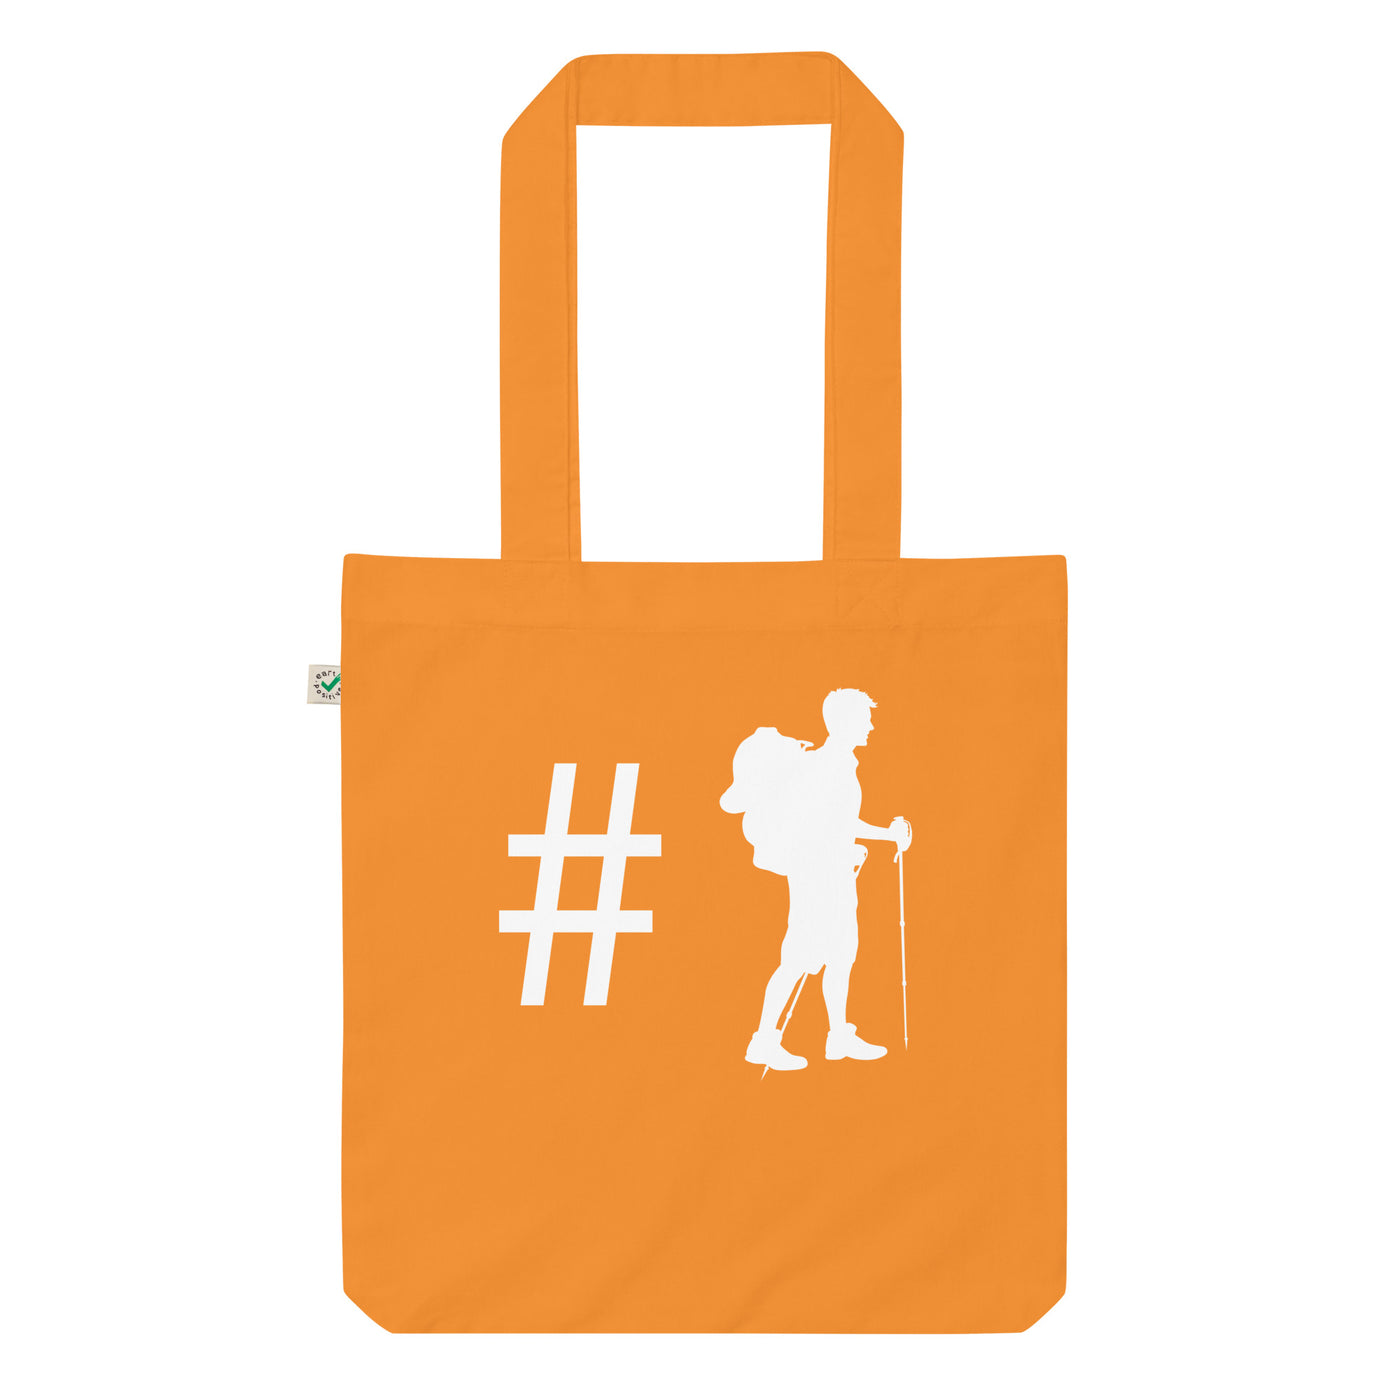 Hashtag - Wandern - Organic Einkaufstasche wandern Cinnamon